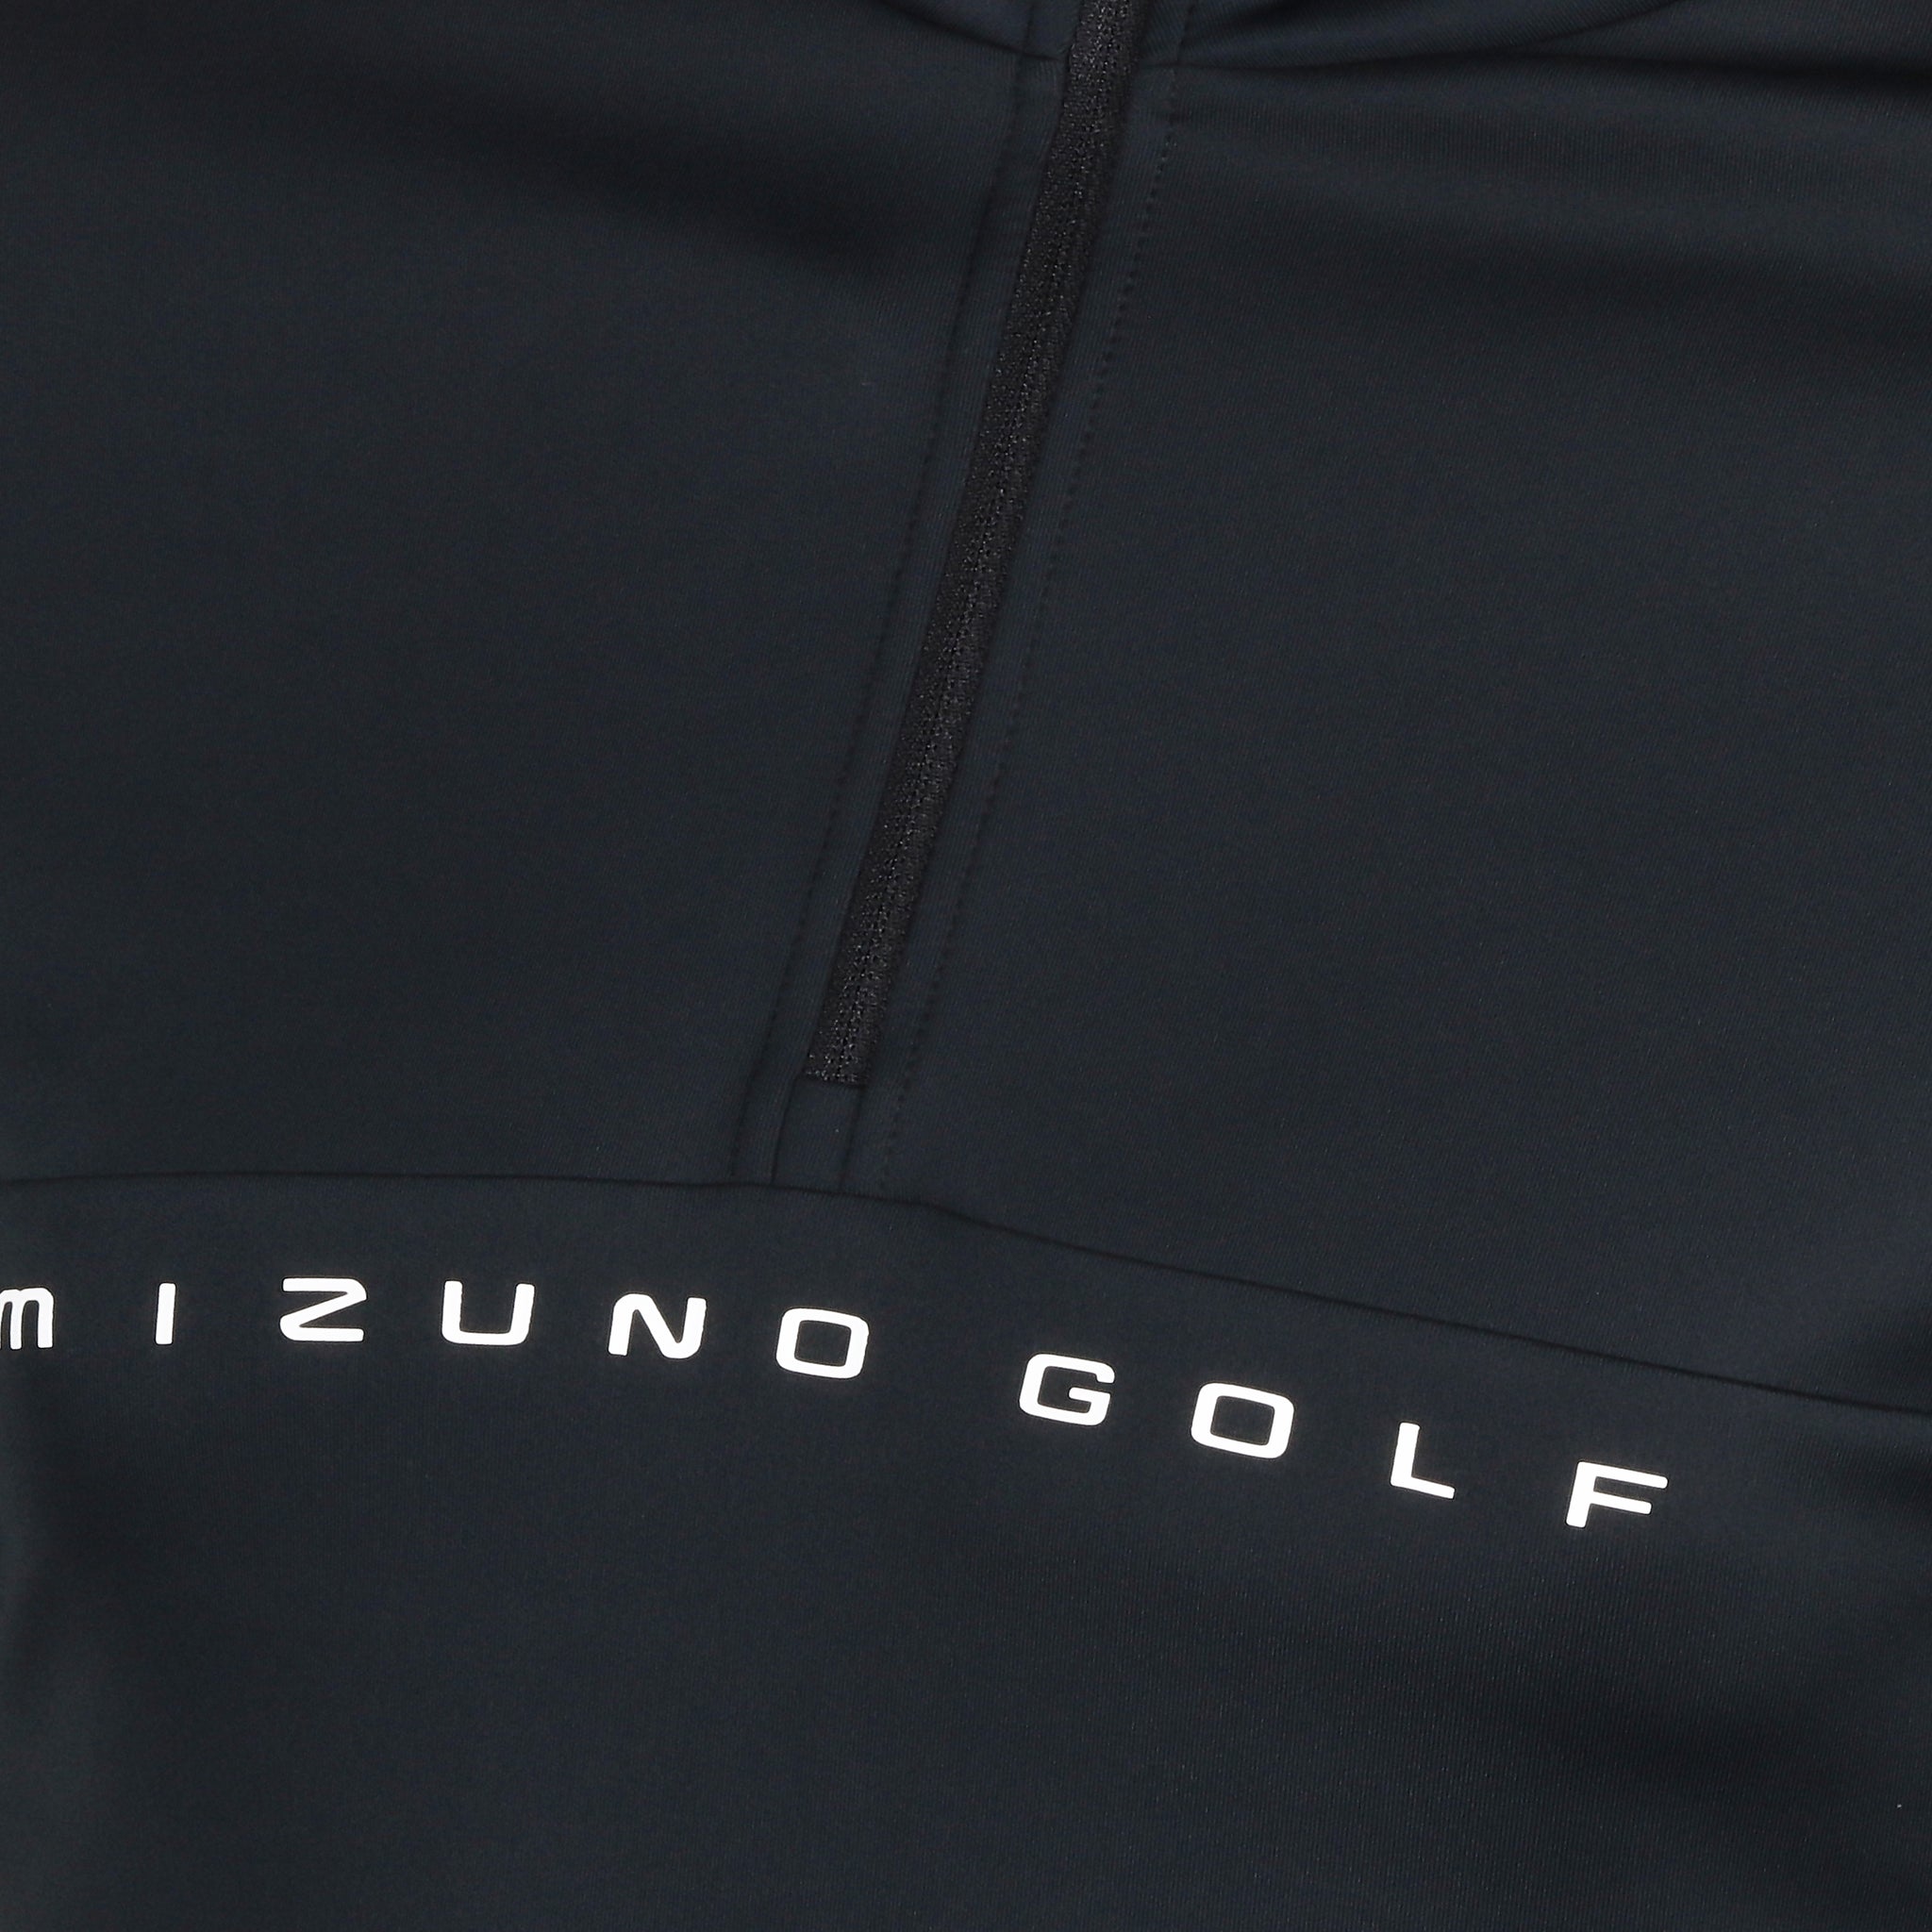 Mizuno Golf Trace 1/4 Zip